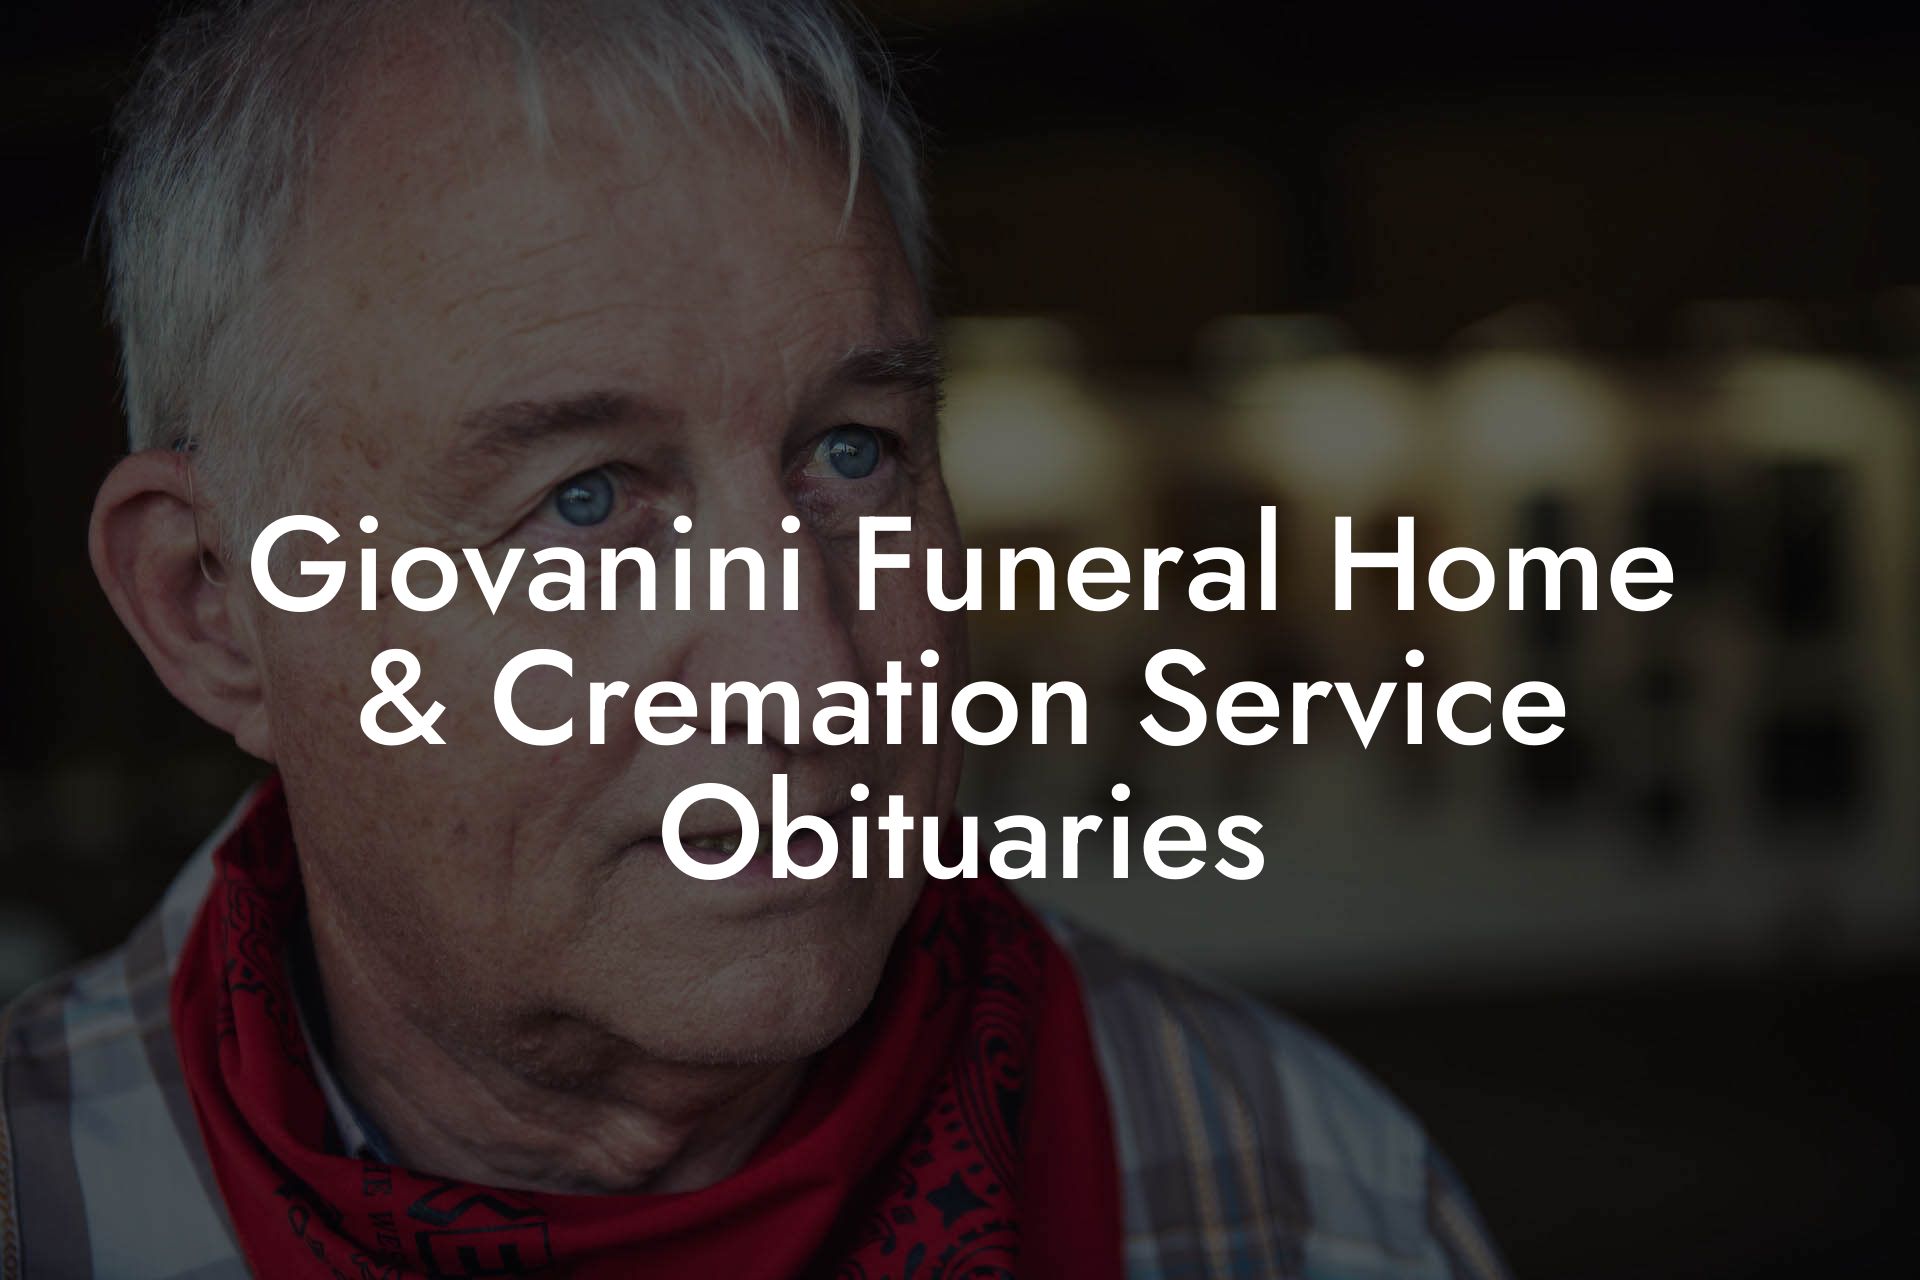 Giovanini Funeral Home & Cremation Service Obituaries